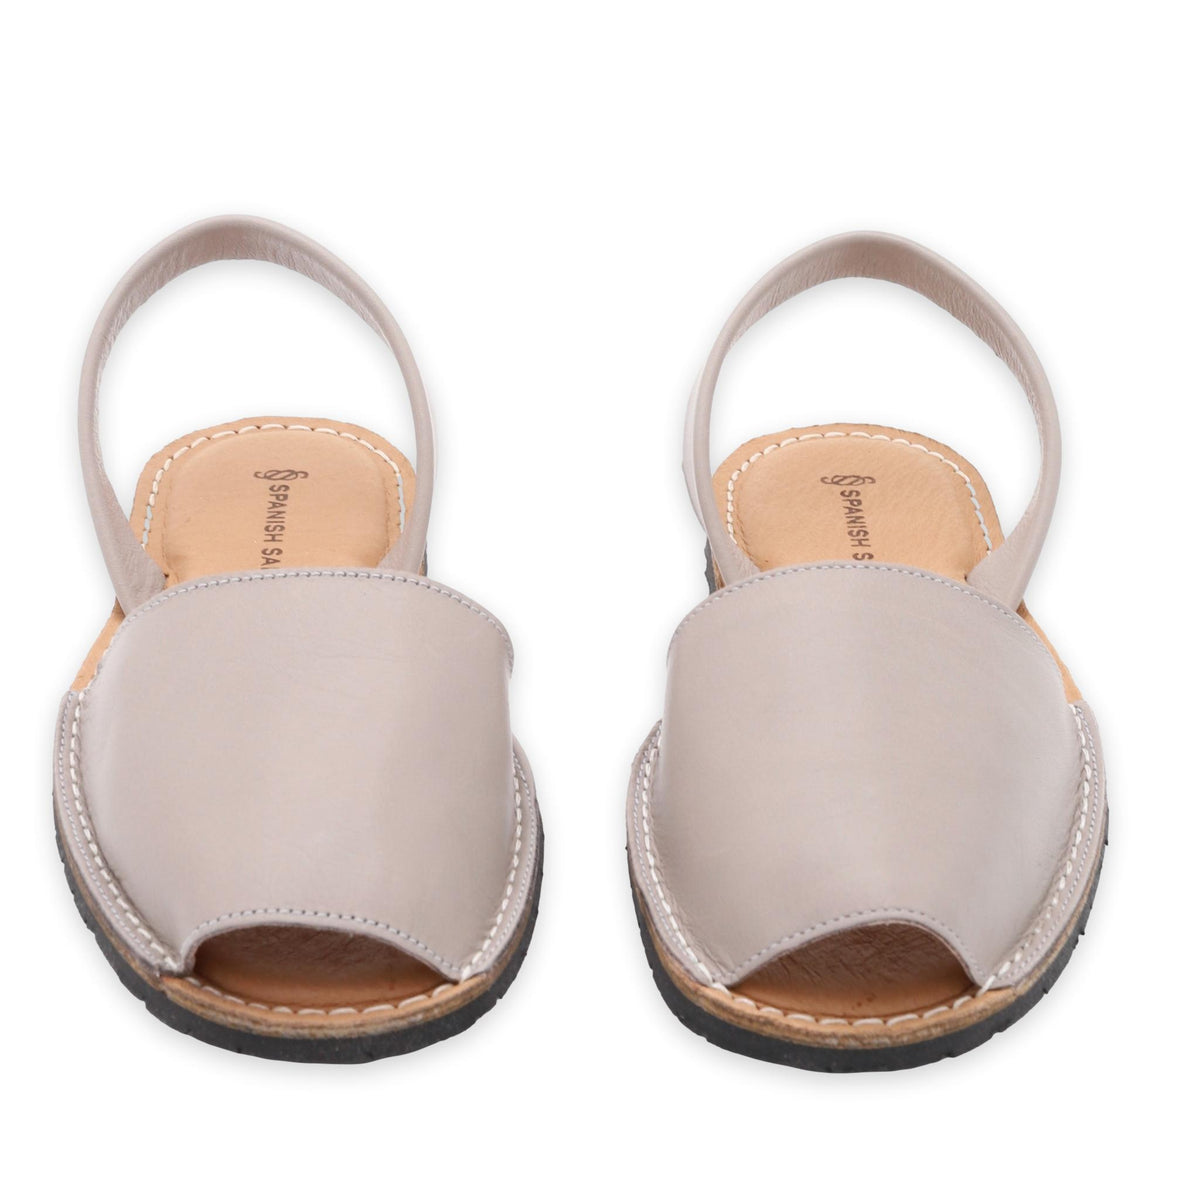 Classic soft grey sandals - The Spanish Sandal Company